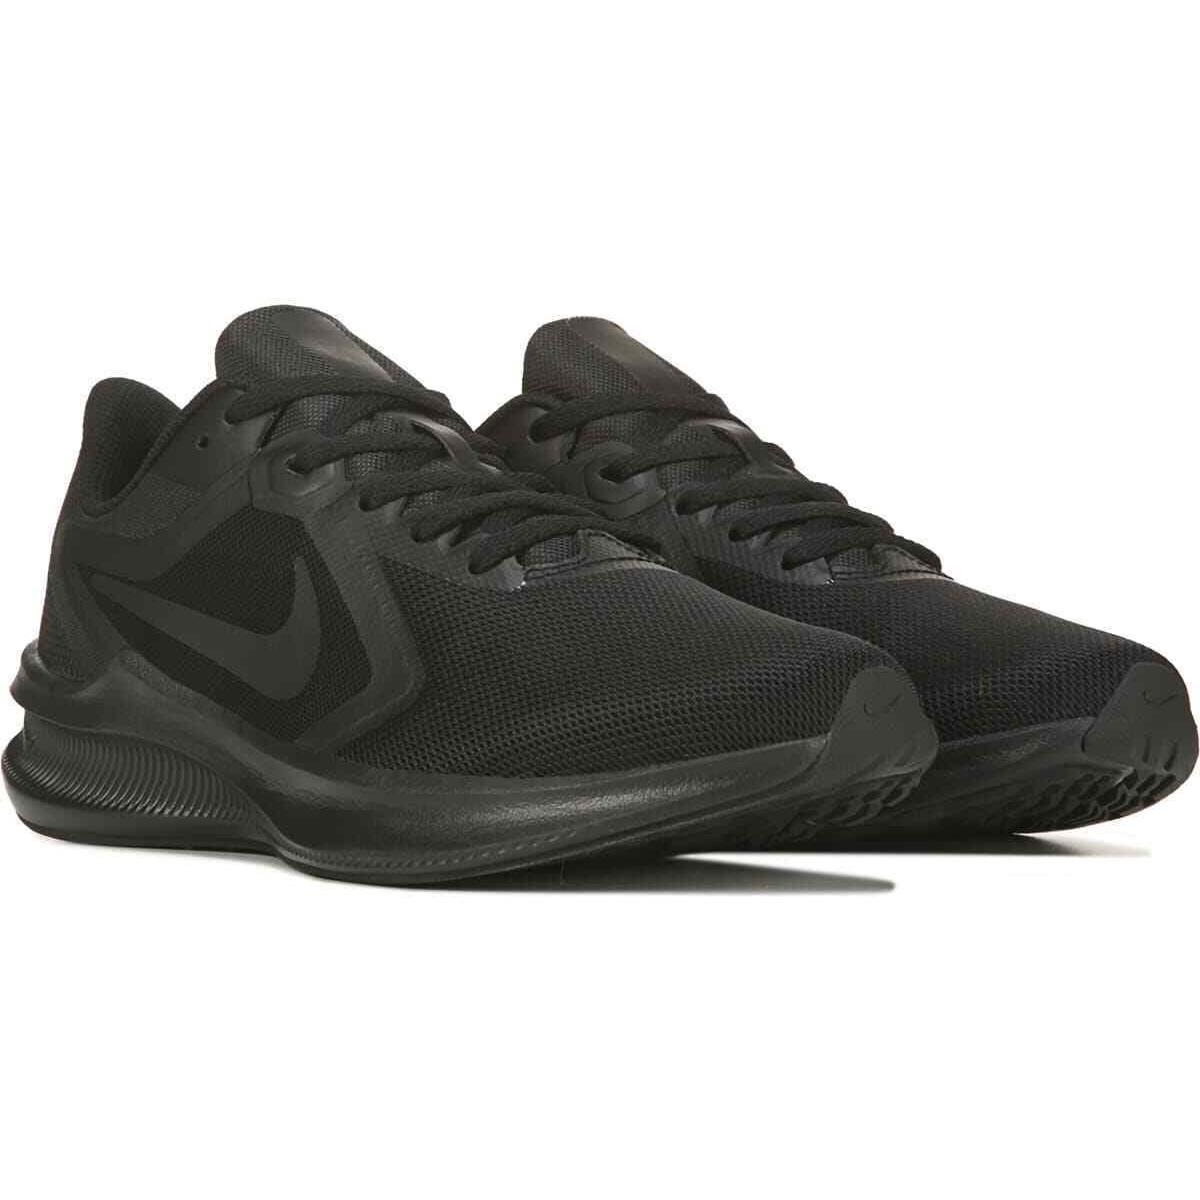 Nike Women`s 11 Downshifter 10 All Black Athletic Tennis Shoes Sneaker Running - Black